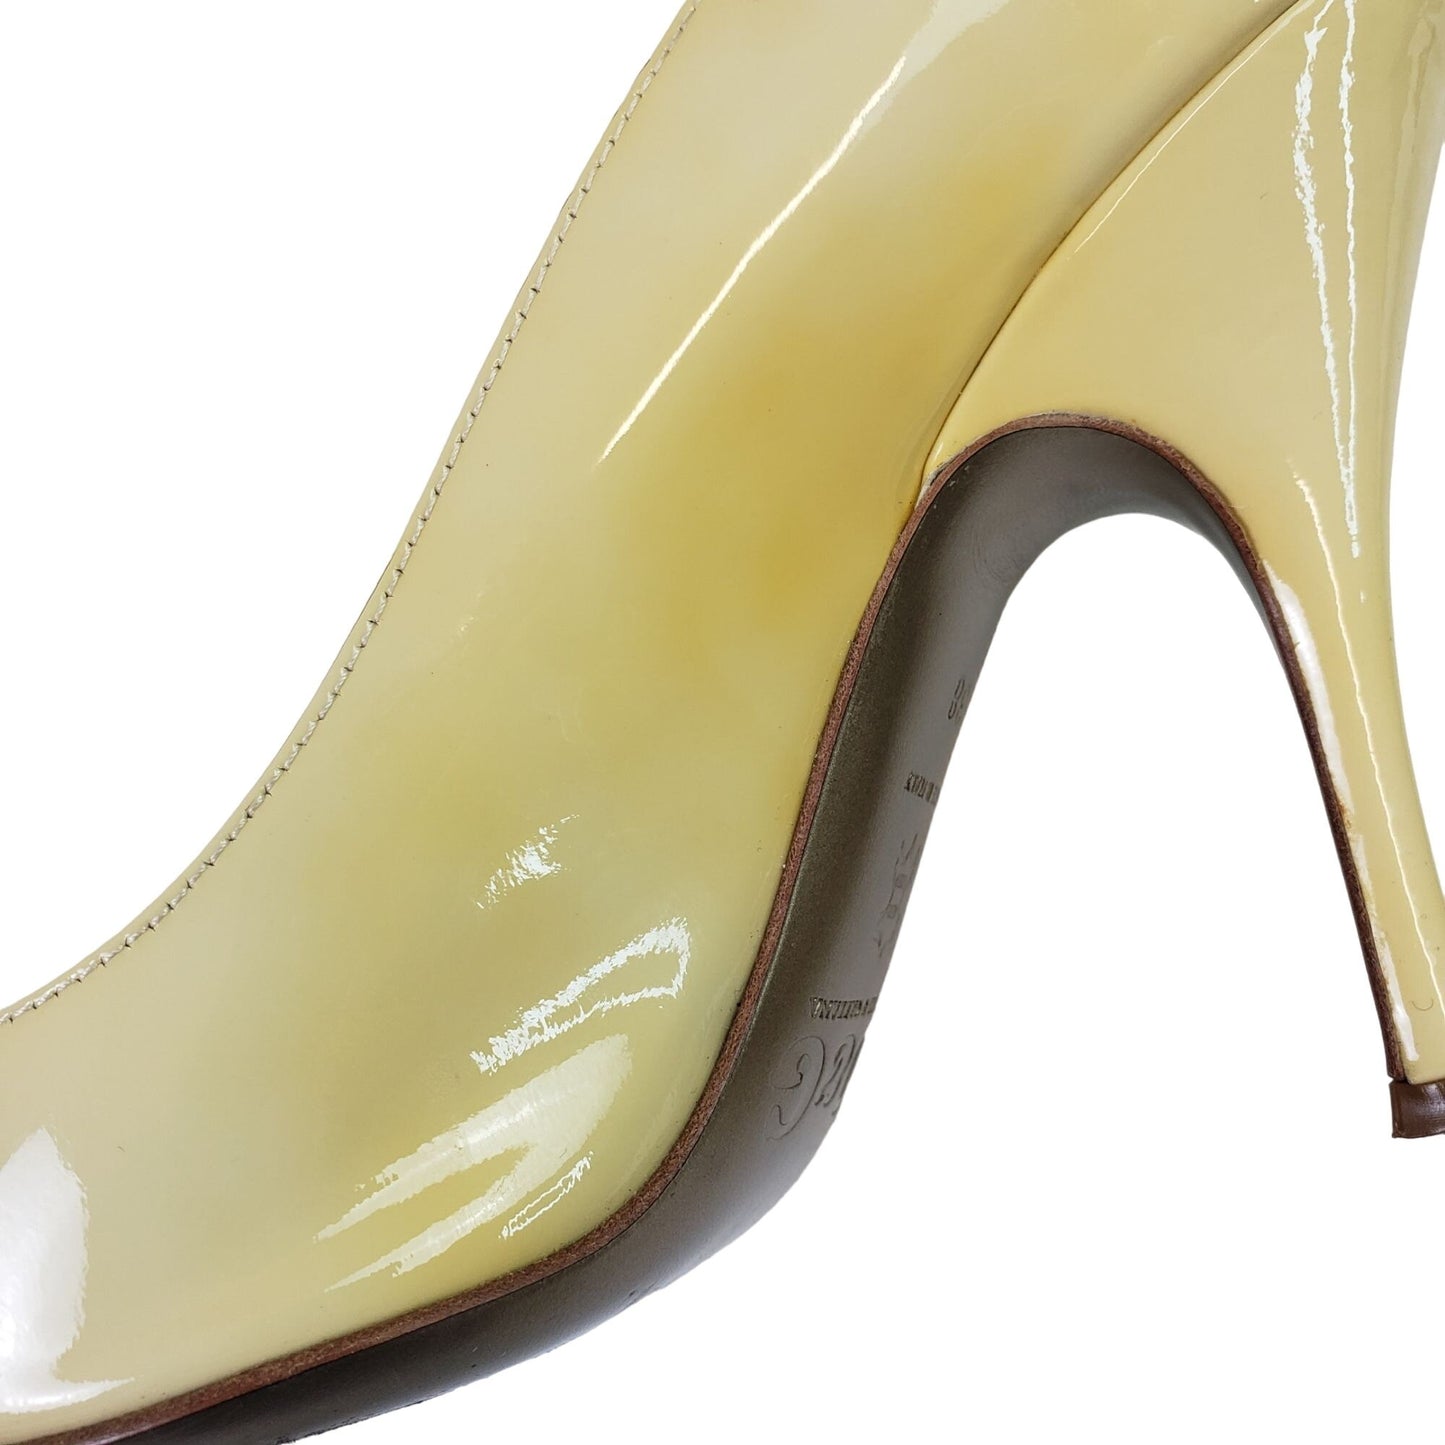 Dolce & Gabbana Patent Leather Spuntata Vernice Peep Toe Heels Size EU 38/US 8